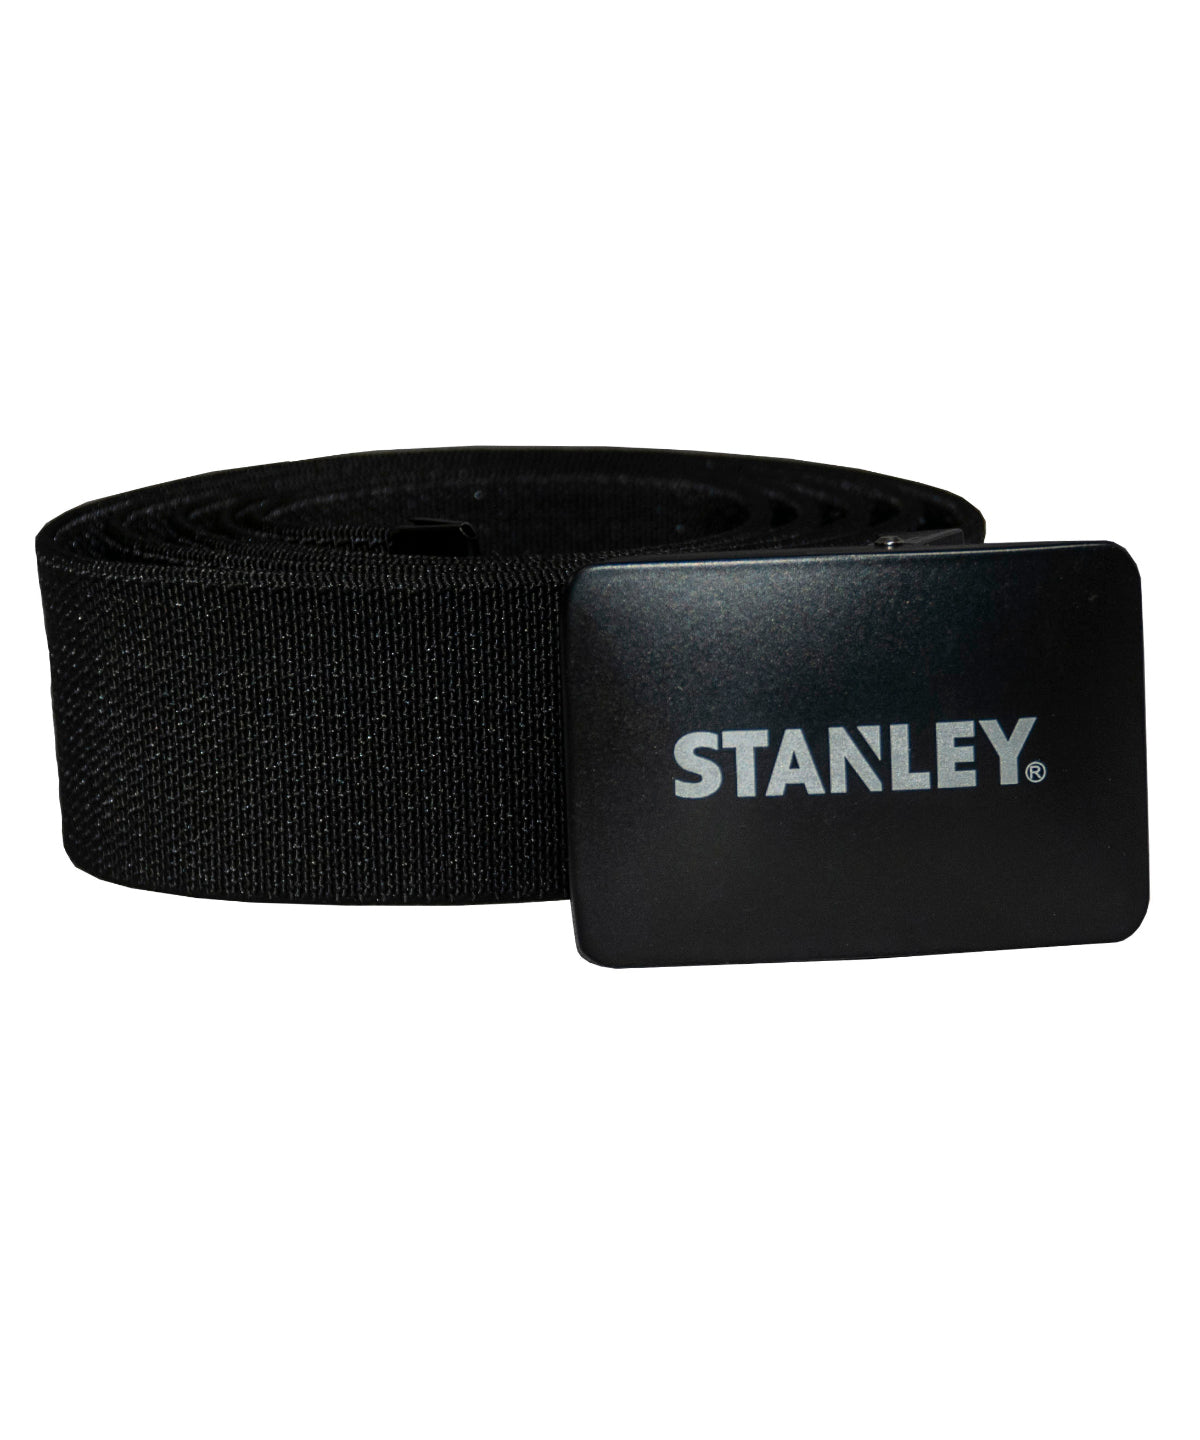 Stanley Workwear Stanley Branded Belt